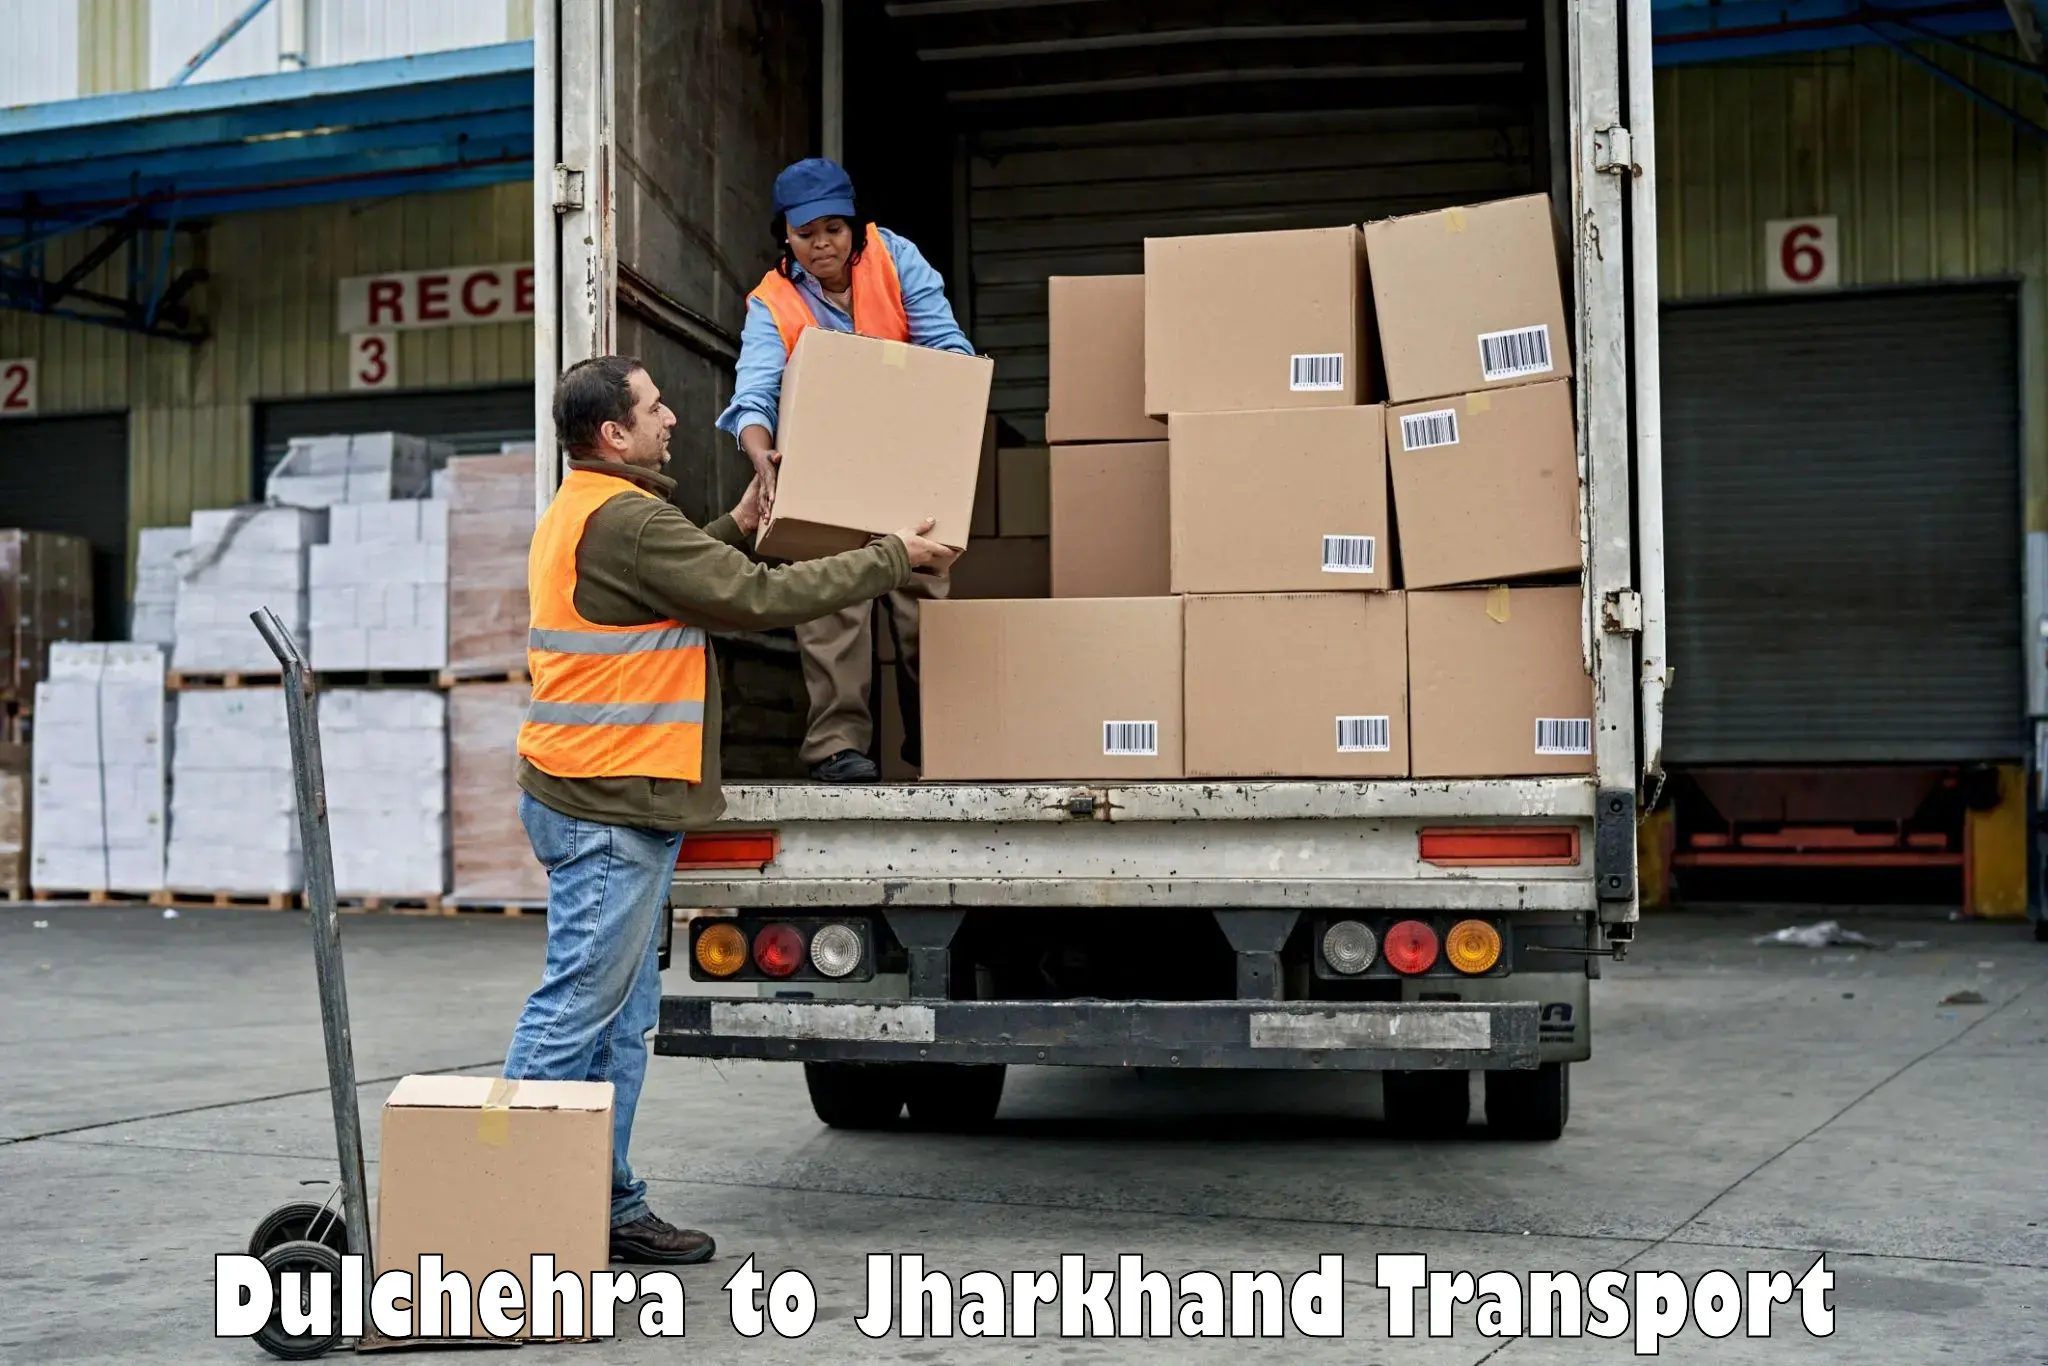 Shipping partner in Dulchehra to Poreyahat